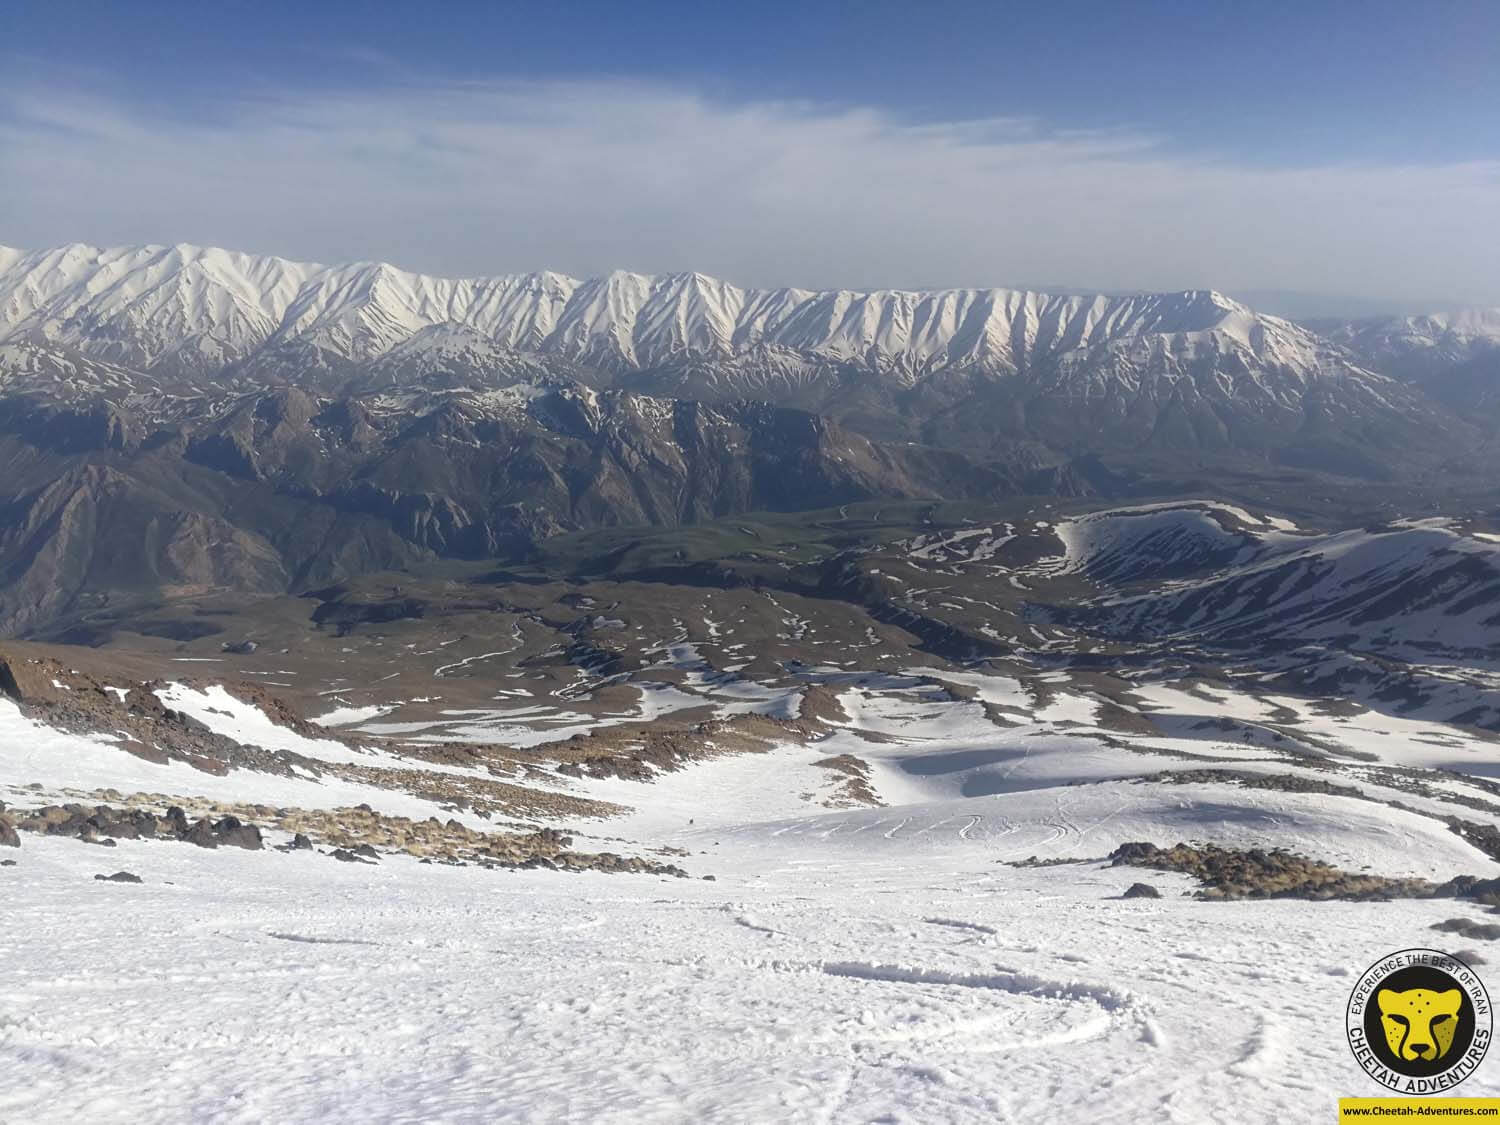 6-7 skiing down to goosfandsara doberar range at the background damavand ski touring